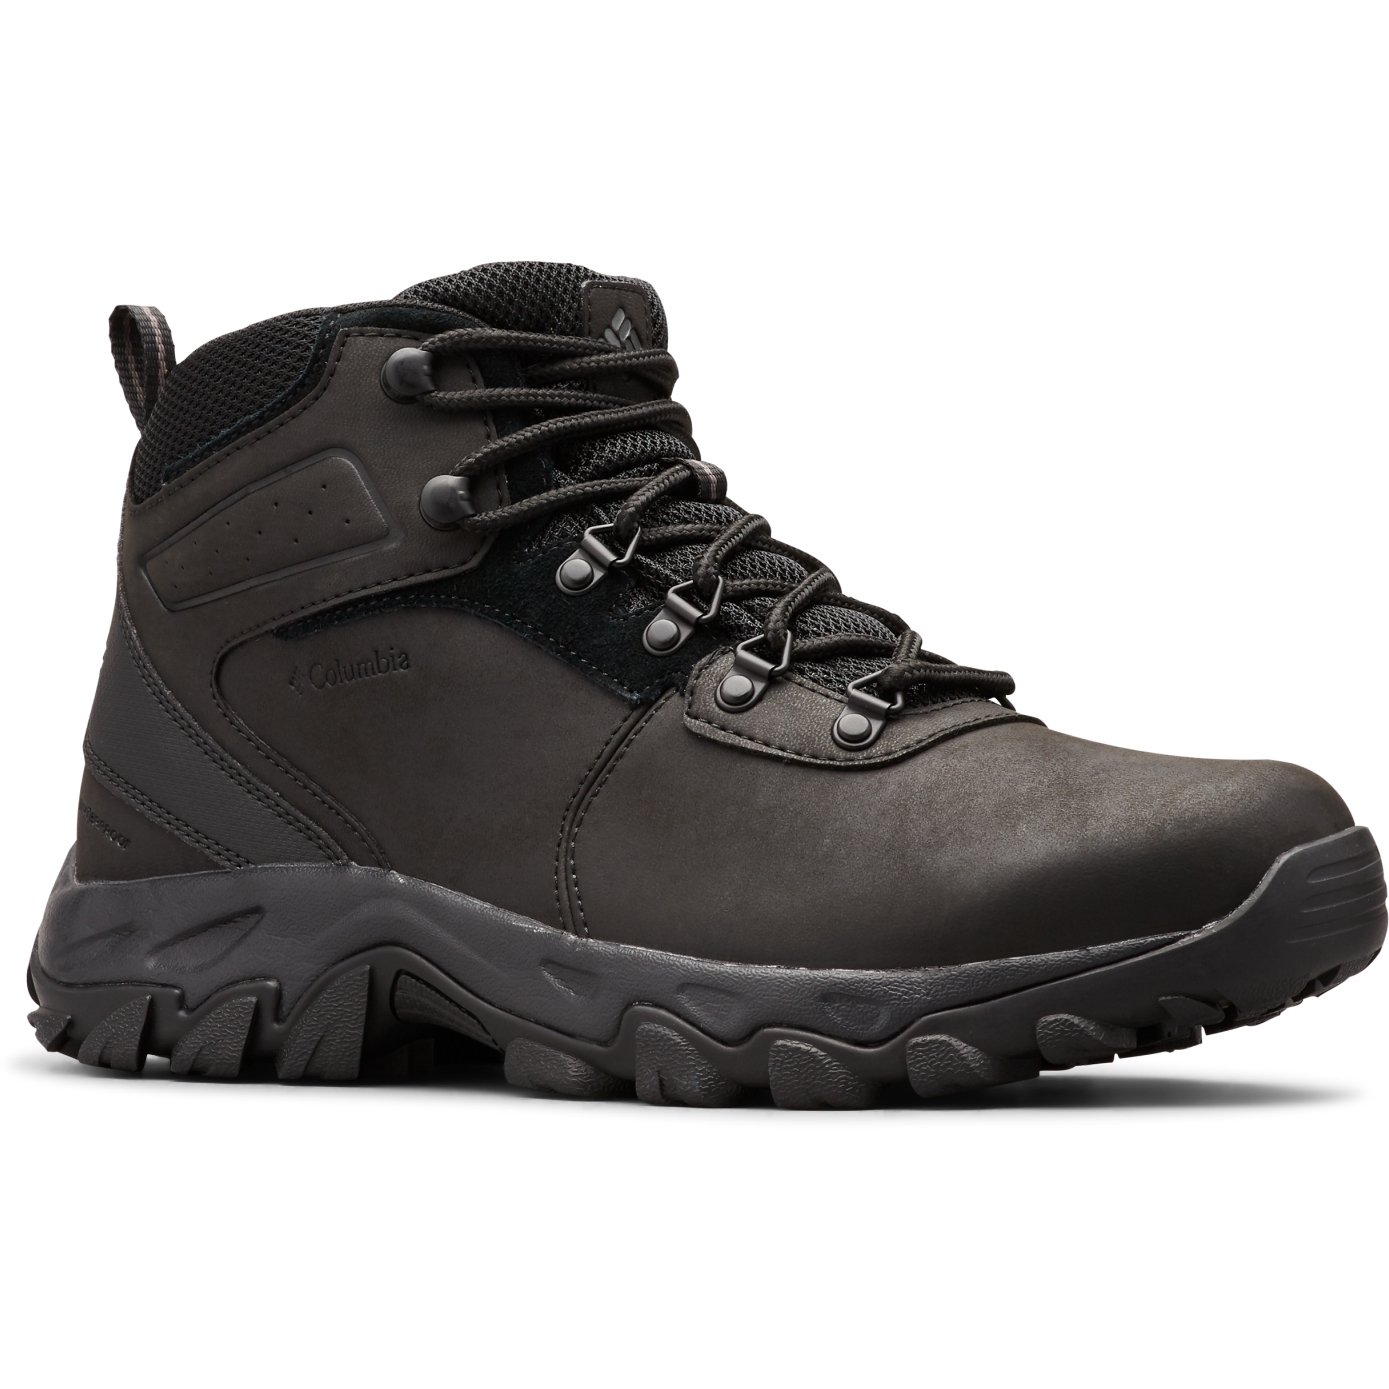 Image of Columbia Newton Ridge Plus II Waterproof Hiking Shoes - Black/Black